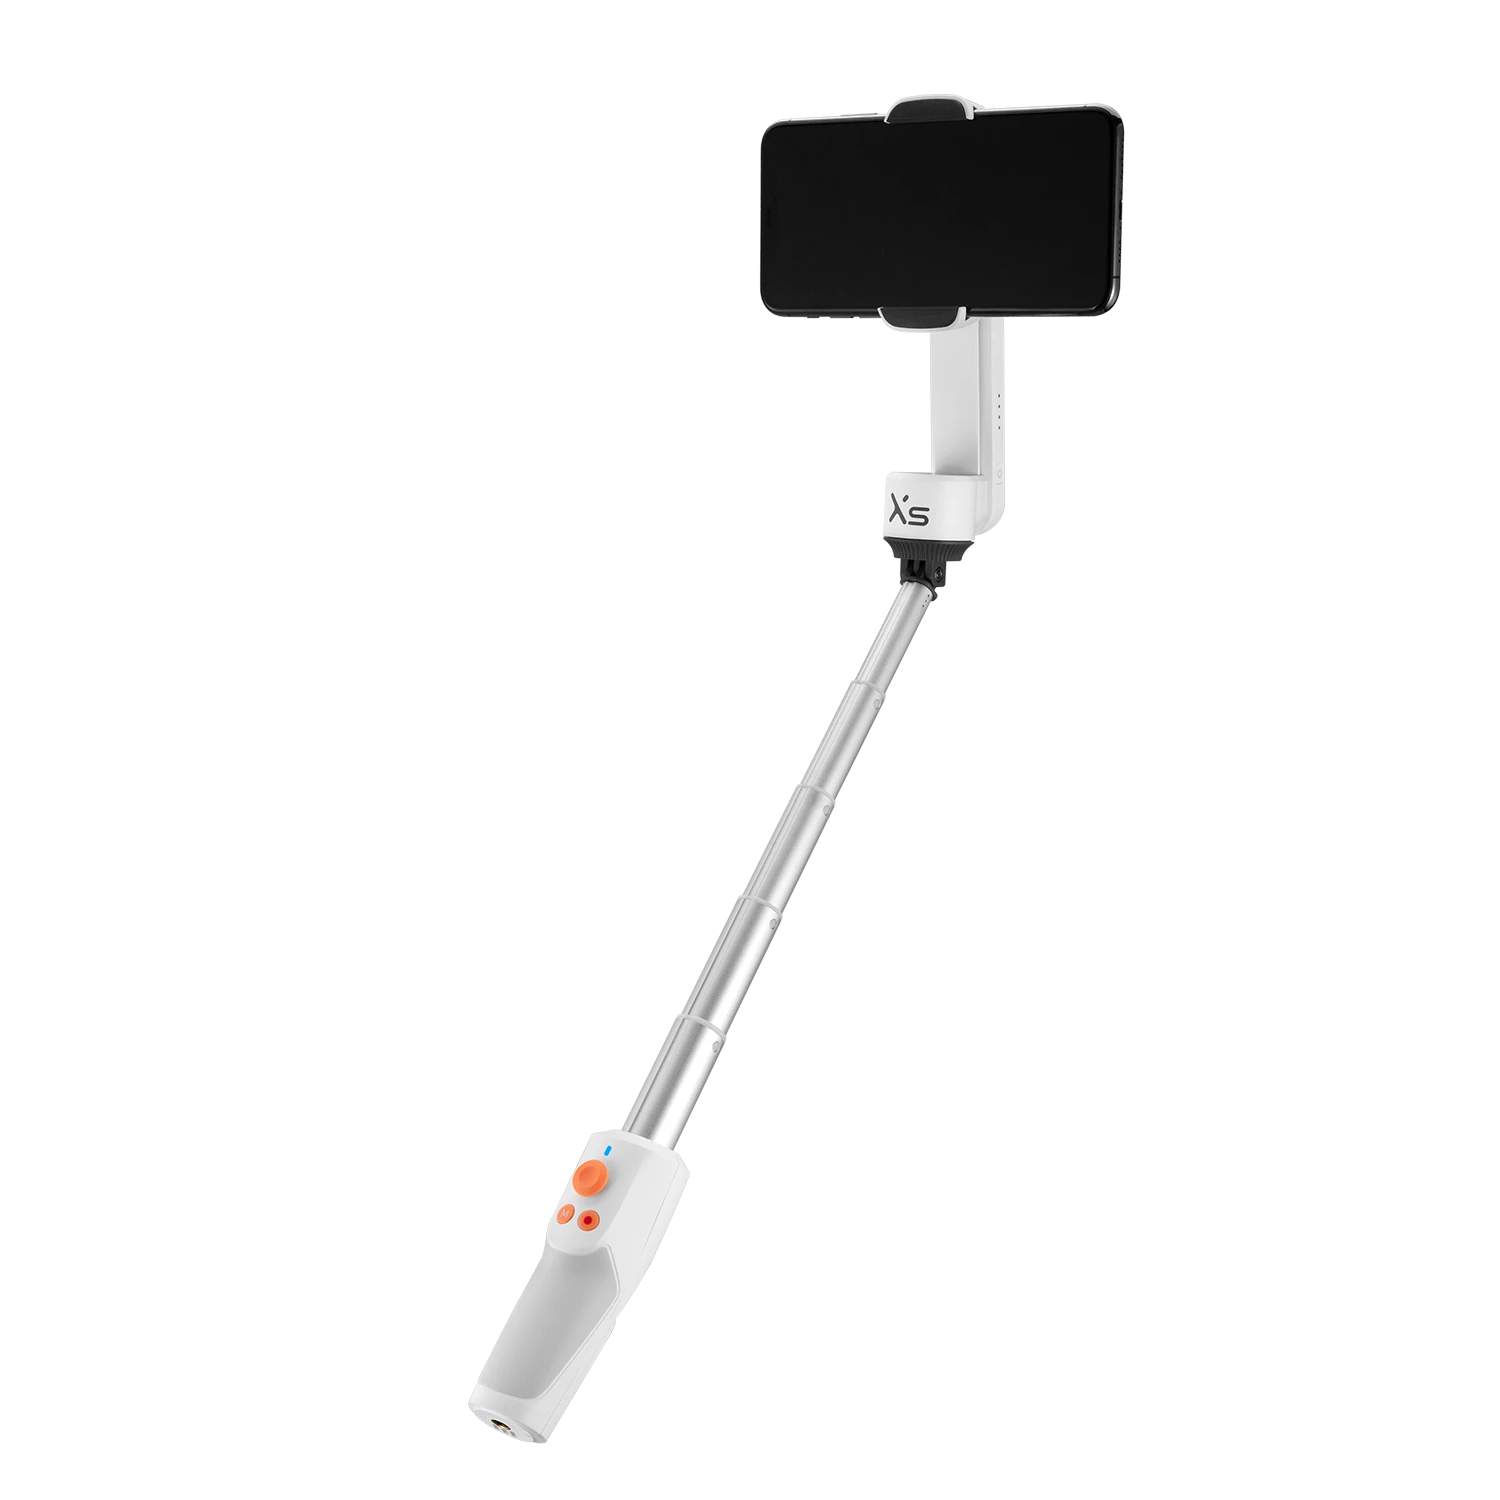 Zhiyun SMOOTH XS 2-Axis handheld gimbal stabilizer for Iphone samsung smartphone Anti-shake smart gimbal stabilizer